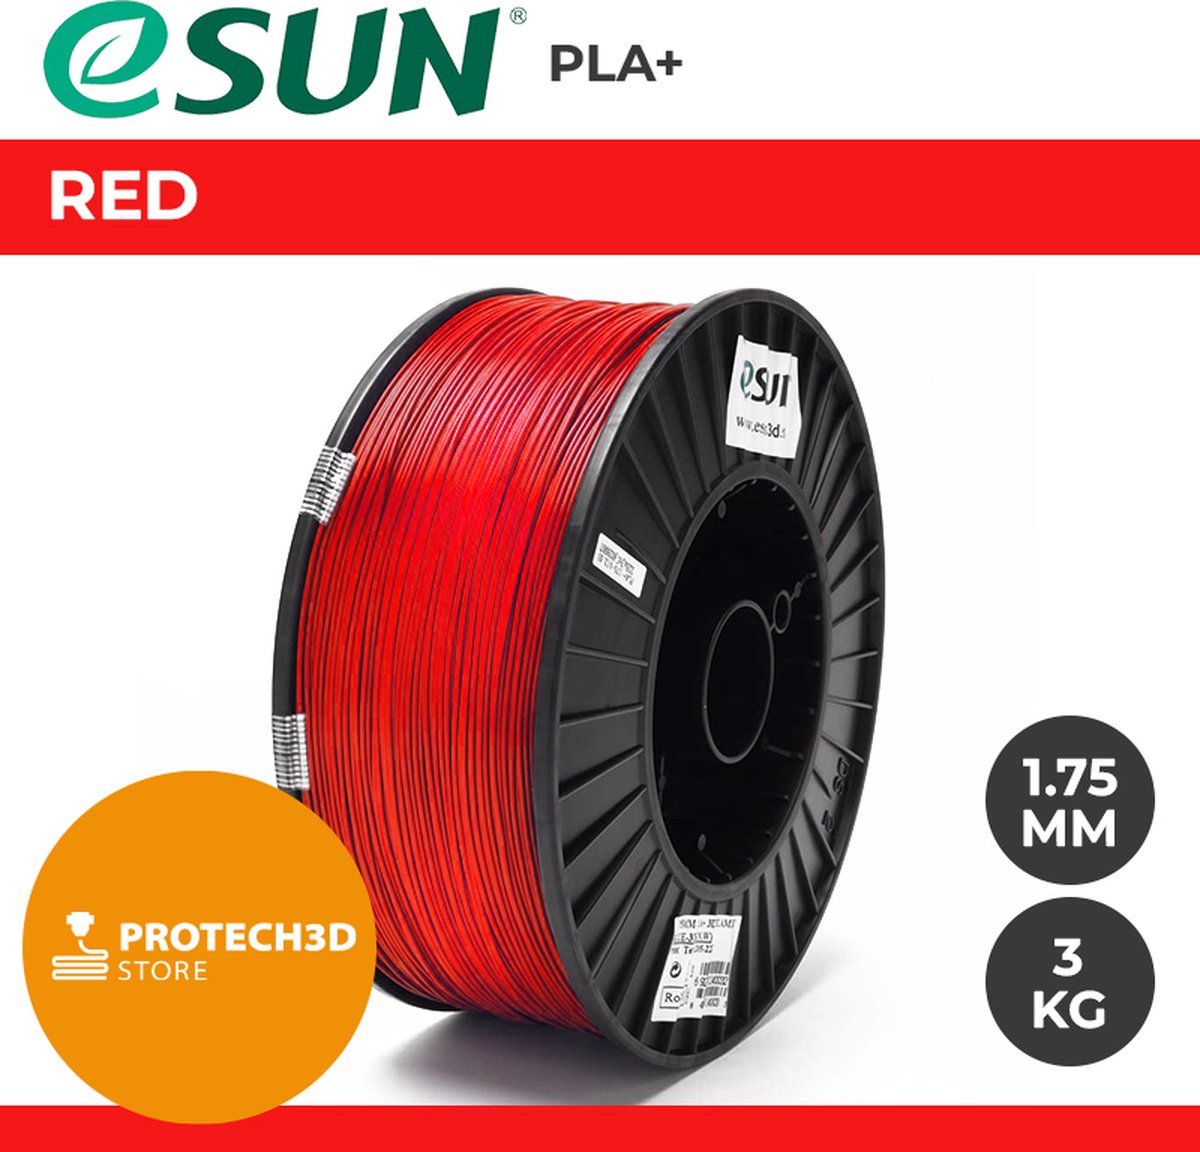 eSun - PLA+ Filament, 1.75mm, Red - 3kg